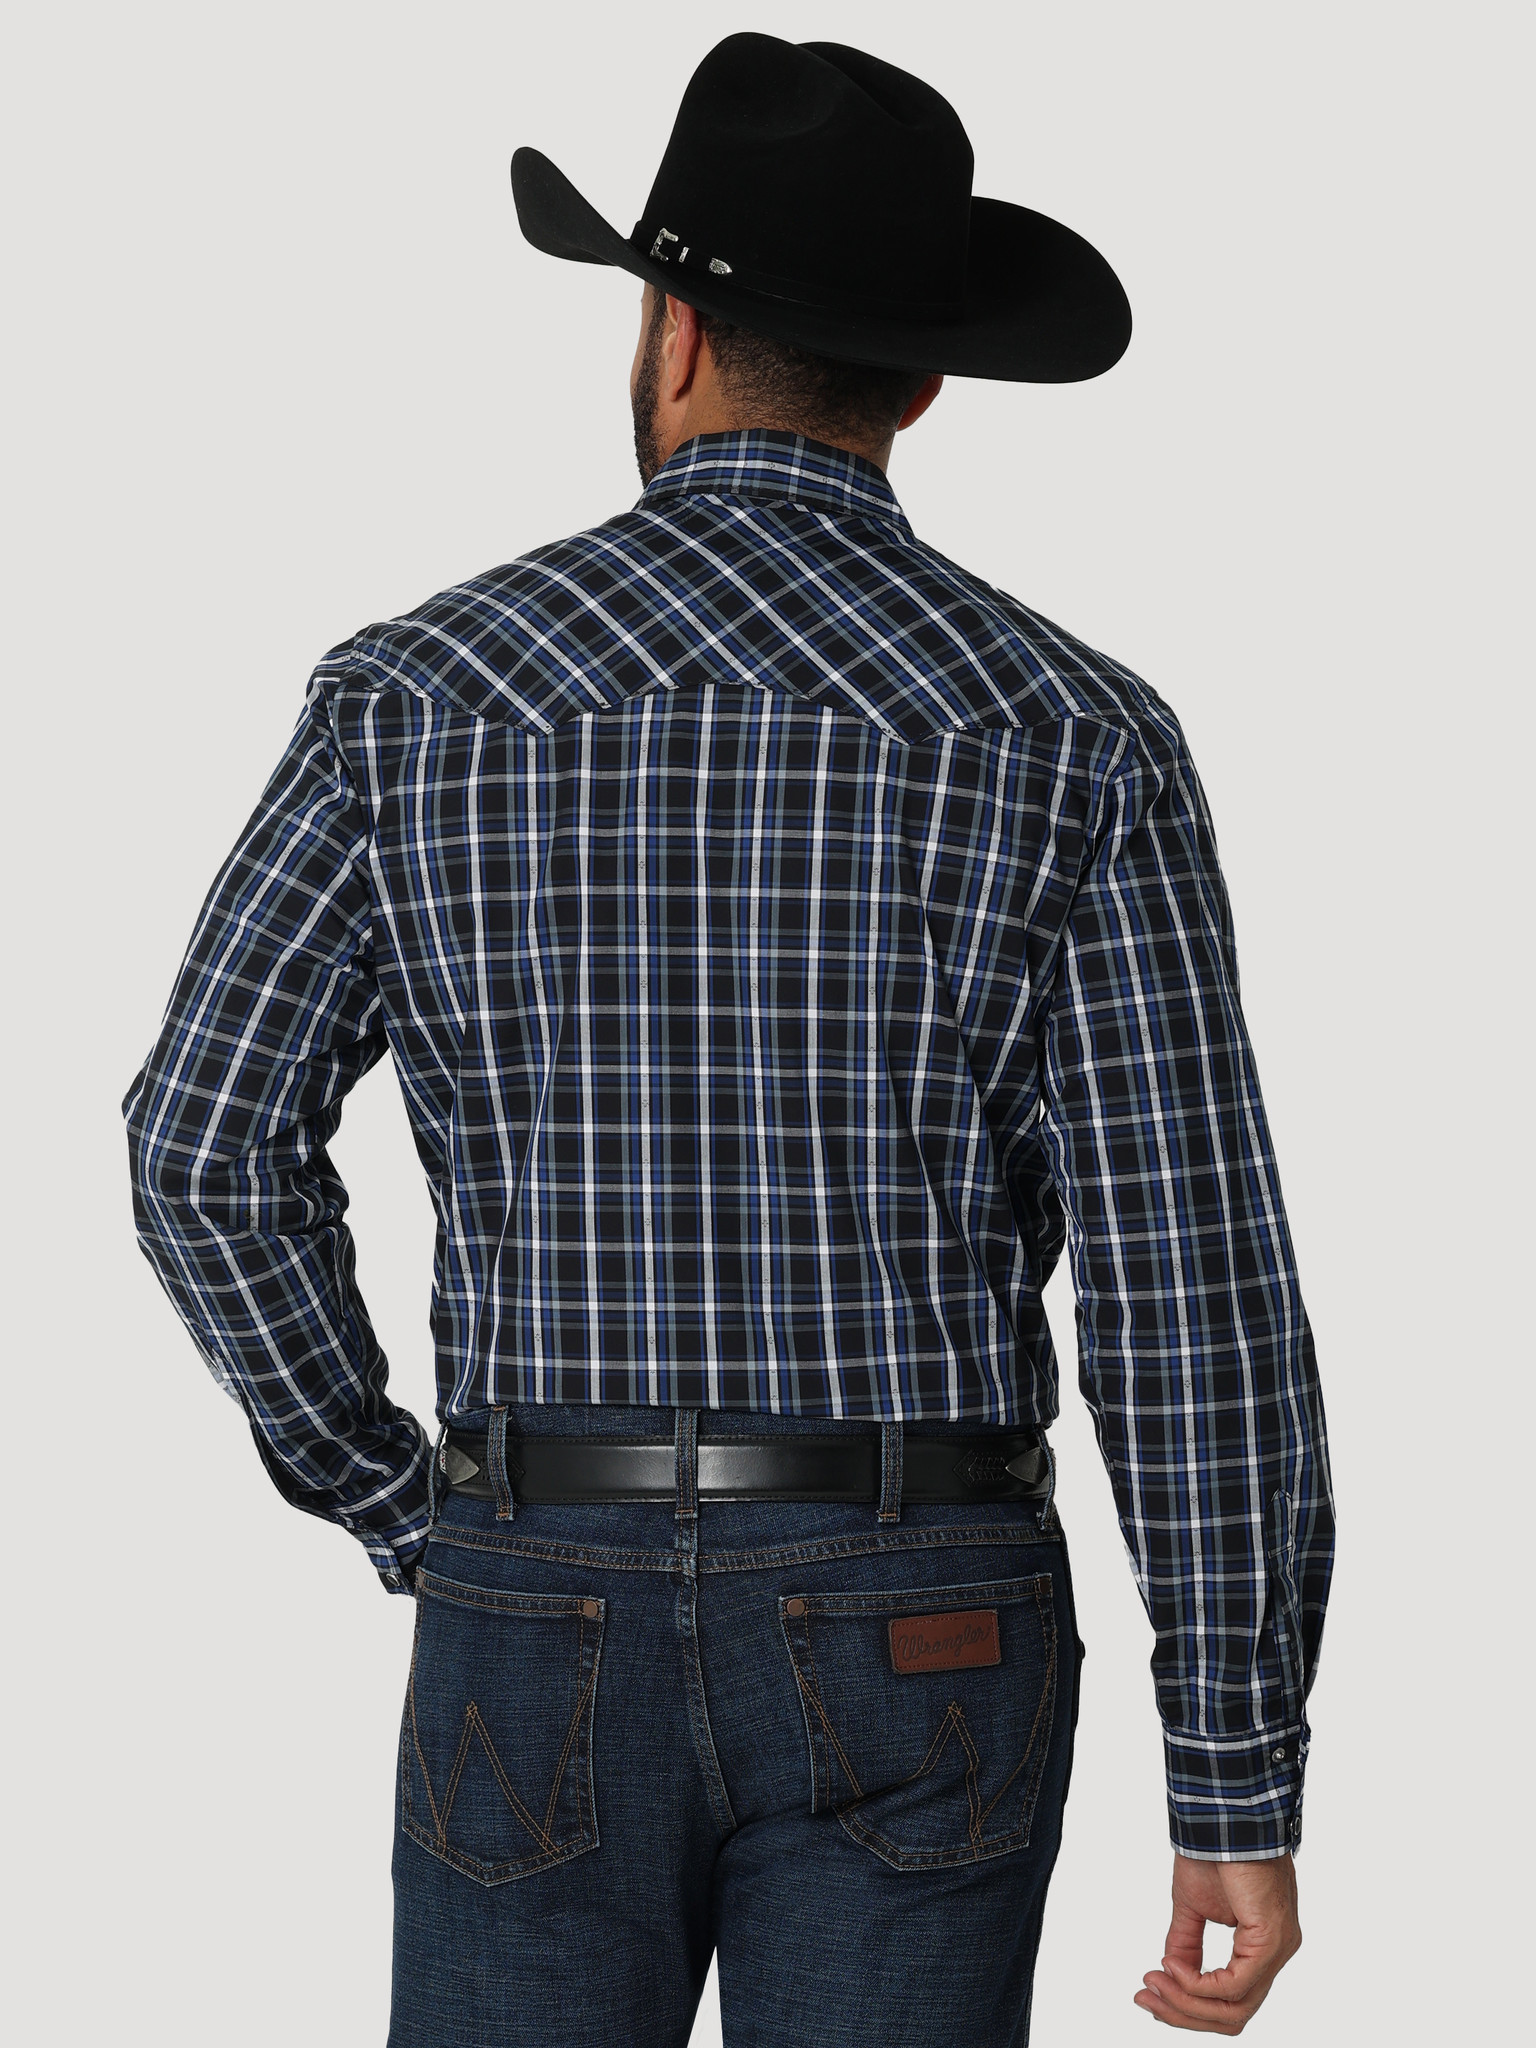 Wrangler Men\'s Black/Blue Plaid LS Western - 2318682 Corral Shirt Wear